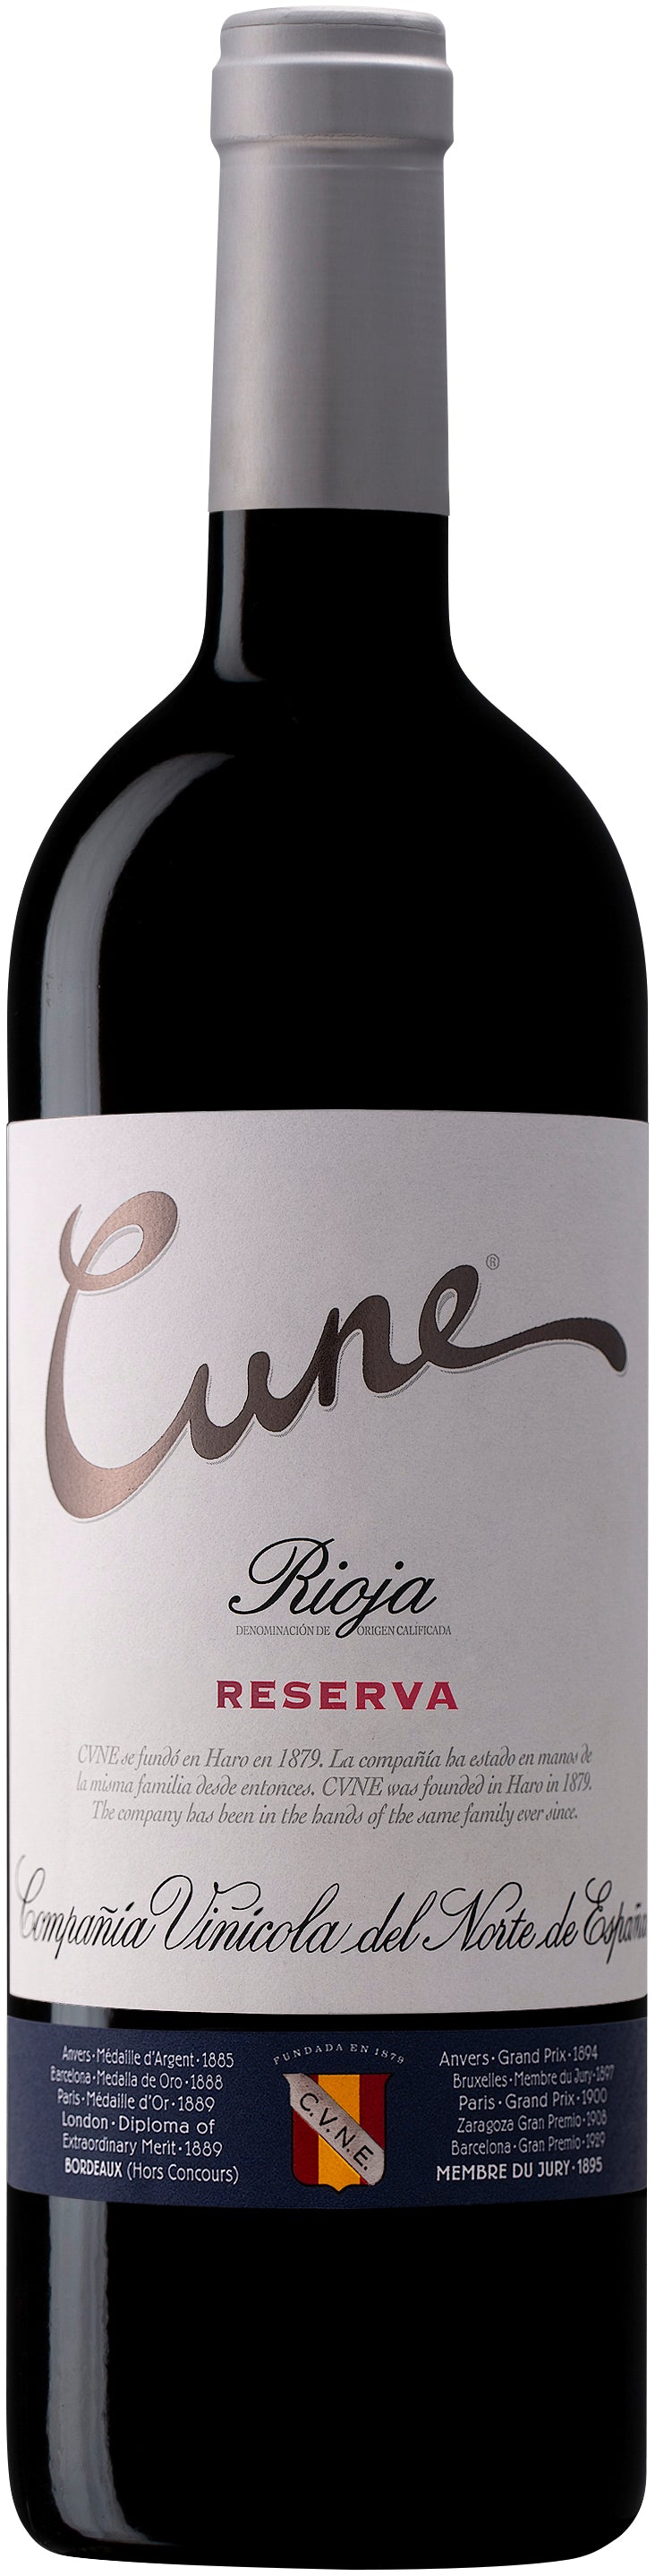 Cune Rioja Tinto Reserva DOCa - StillWine GmbH